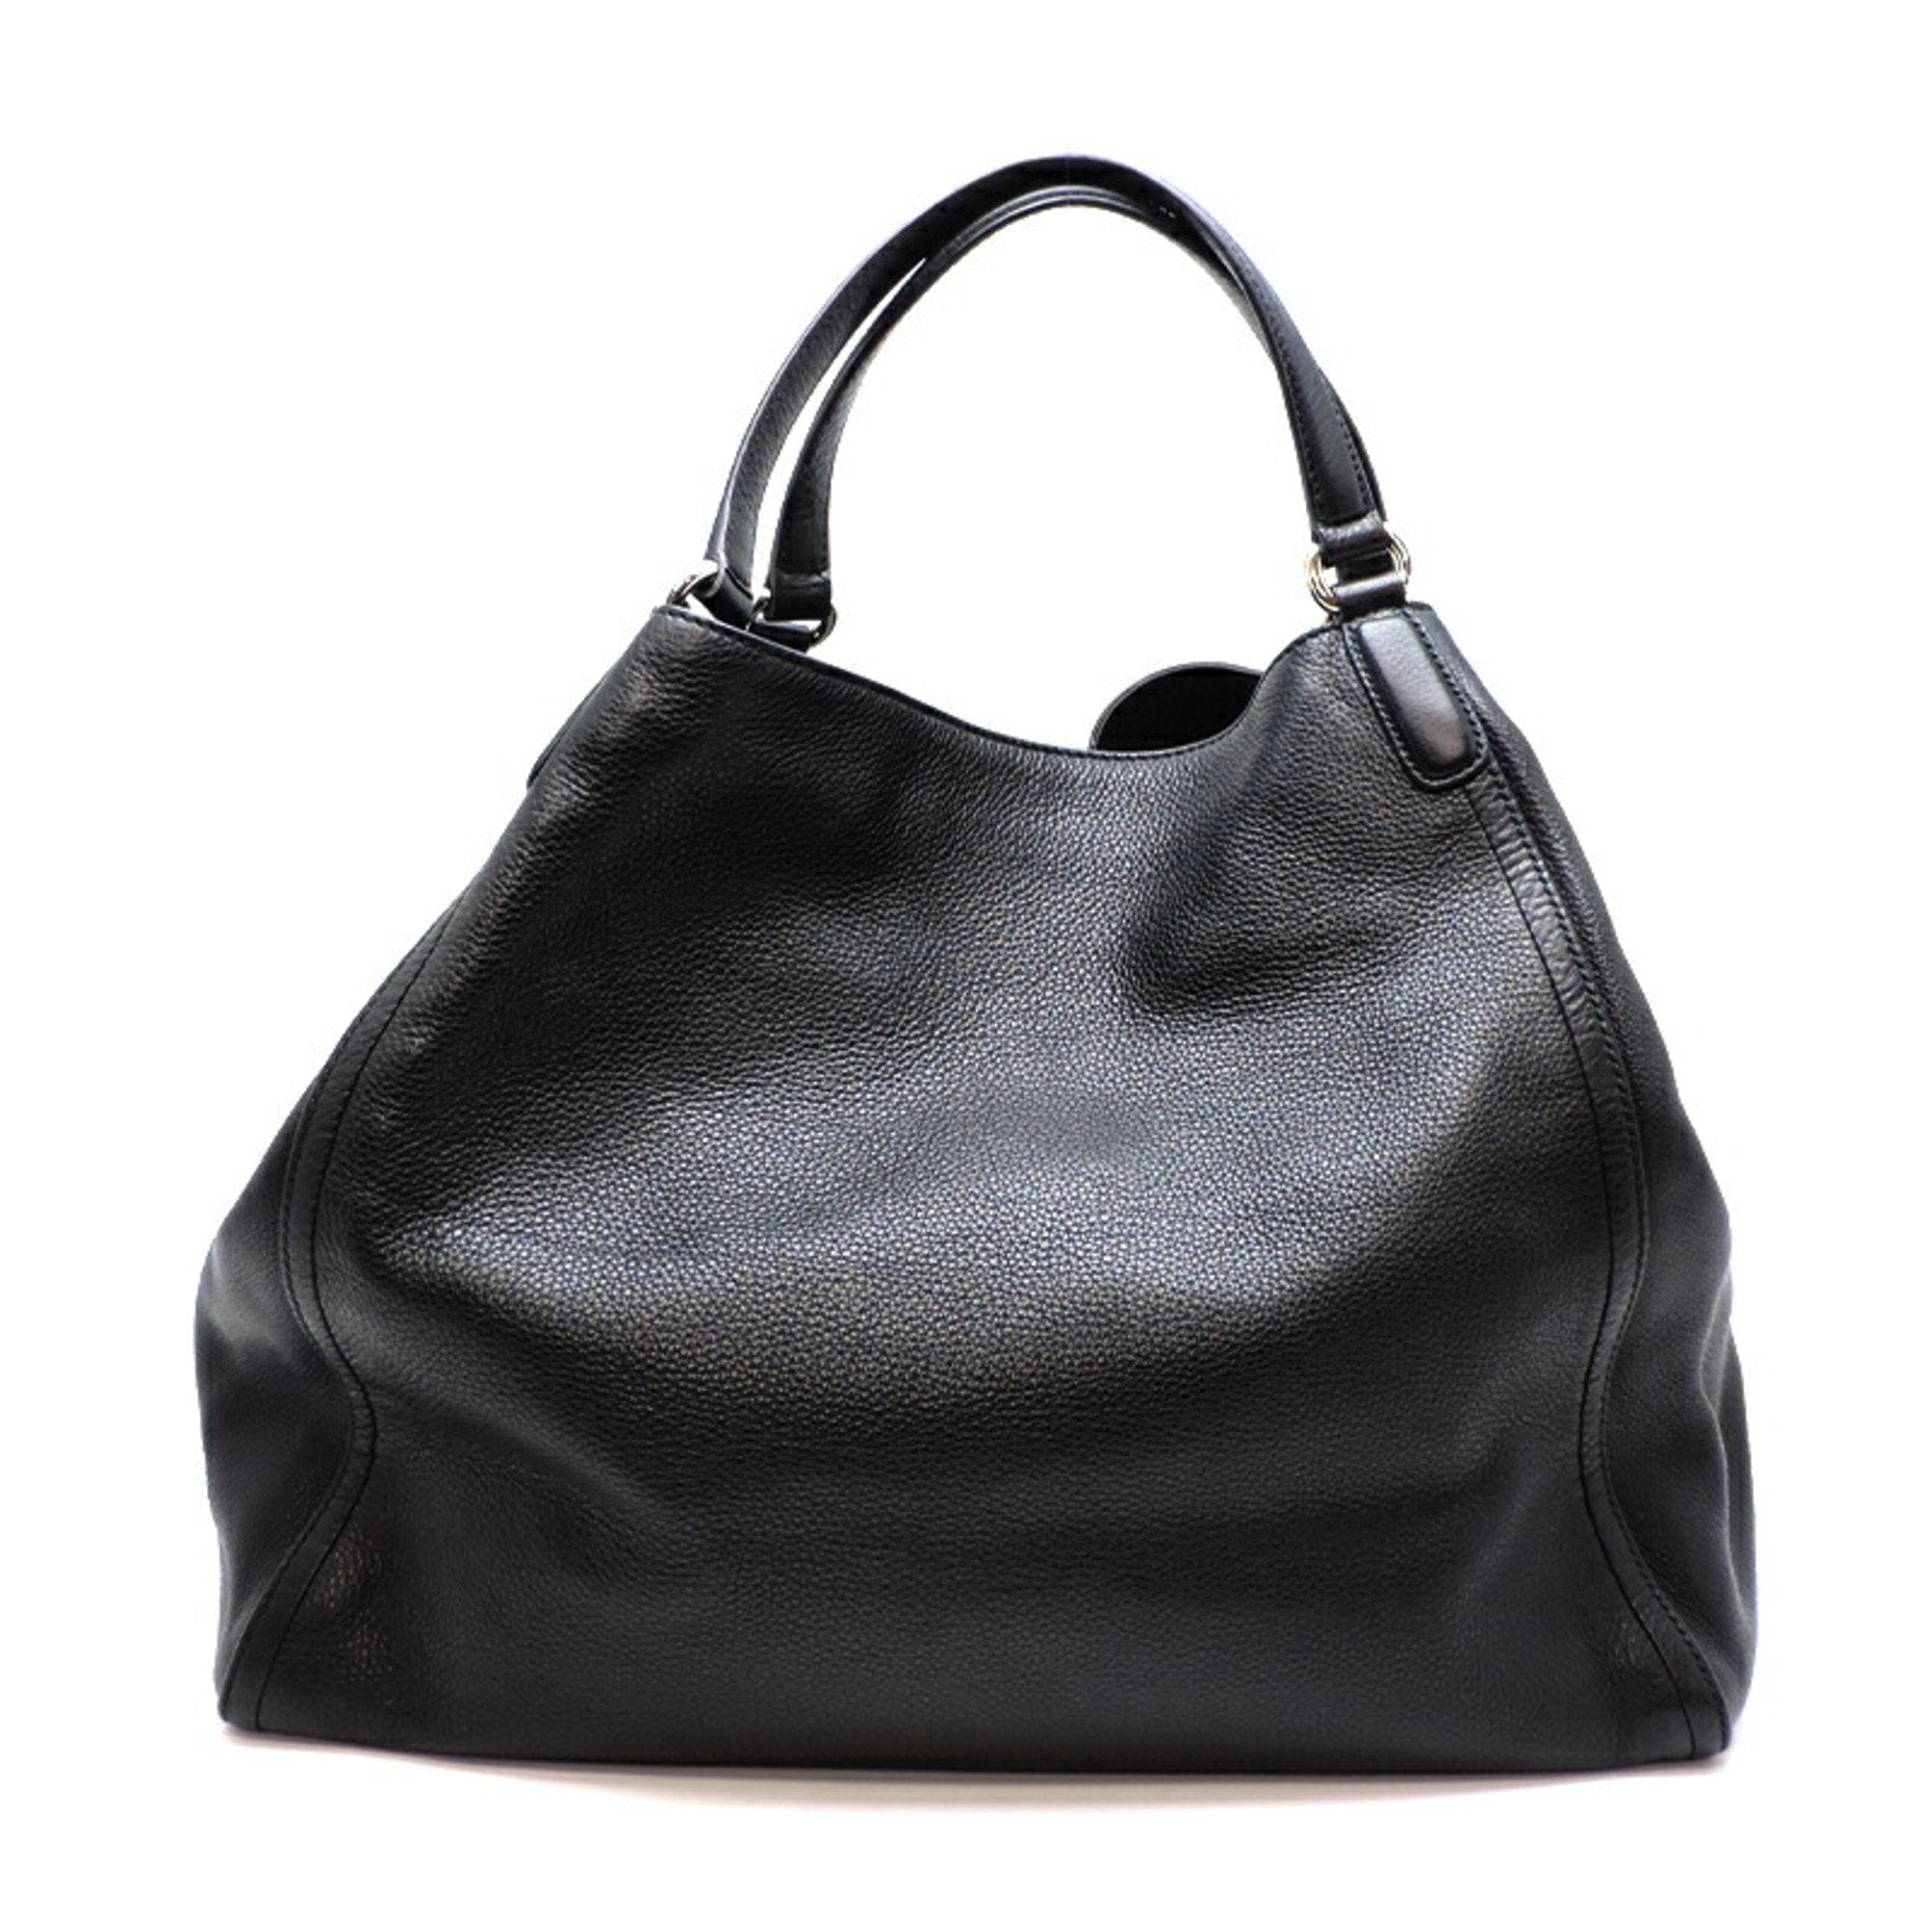 Gucci Interlocking Tassel Bag Women's Tote 282308 Leather Black